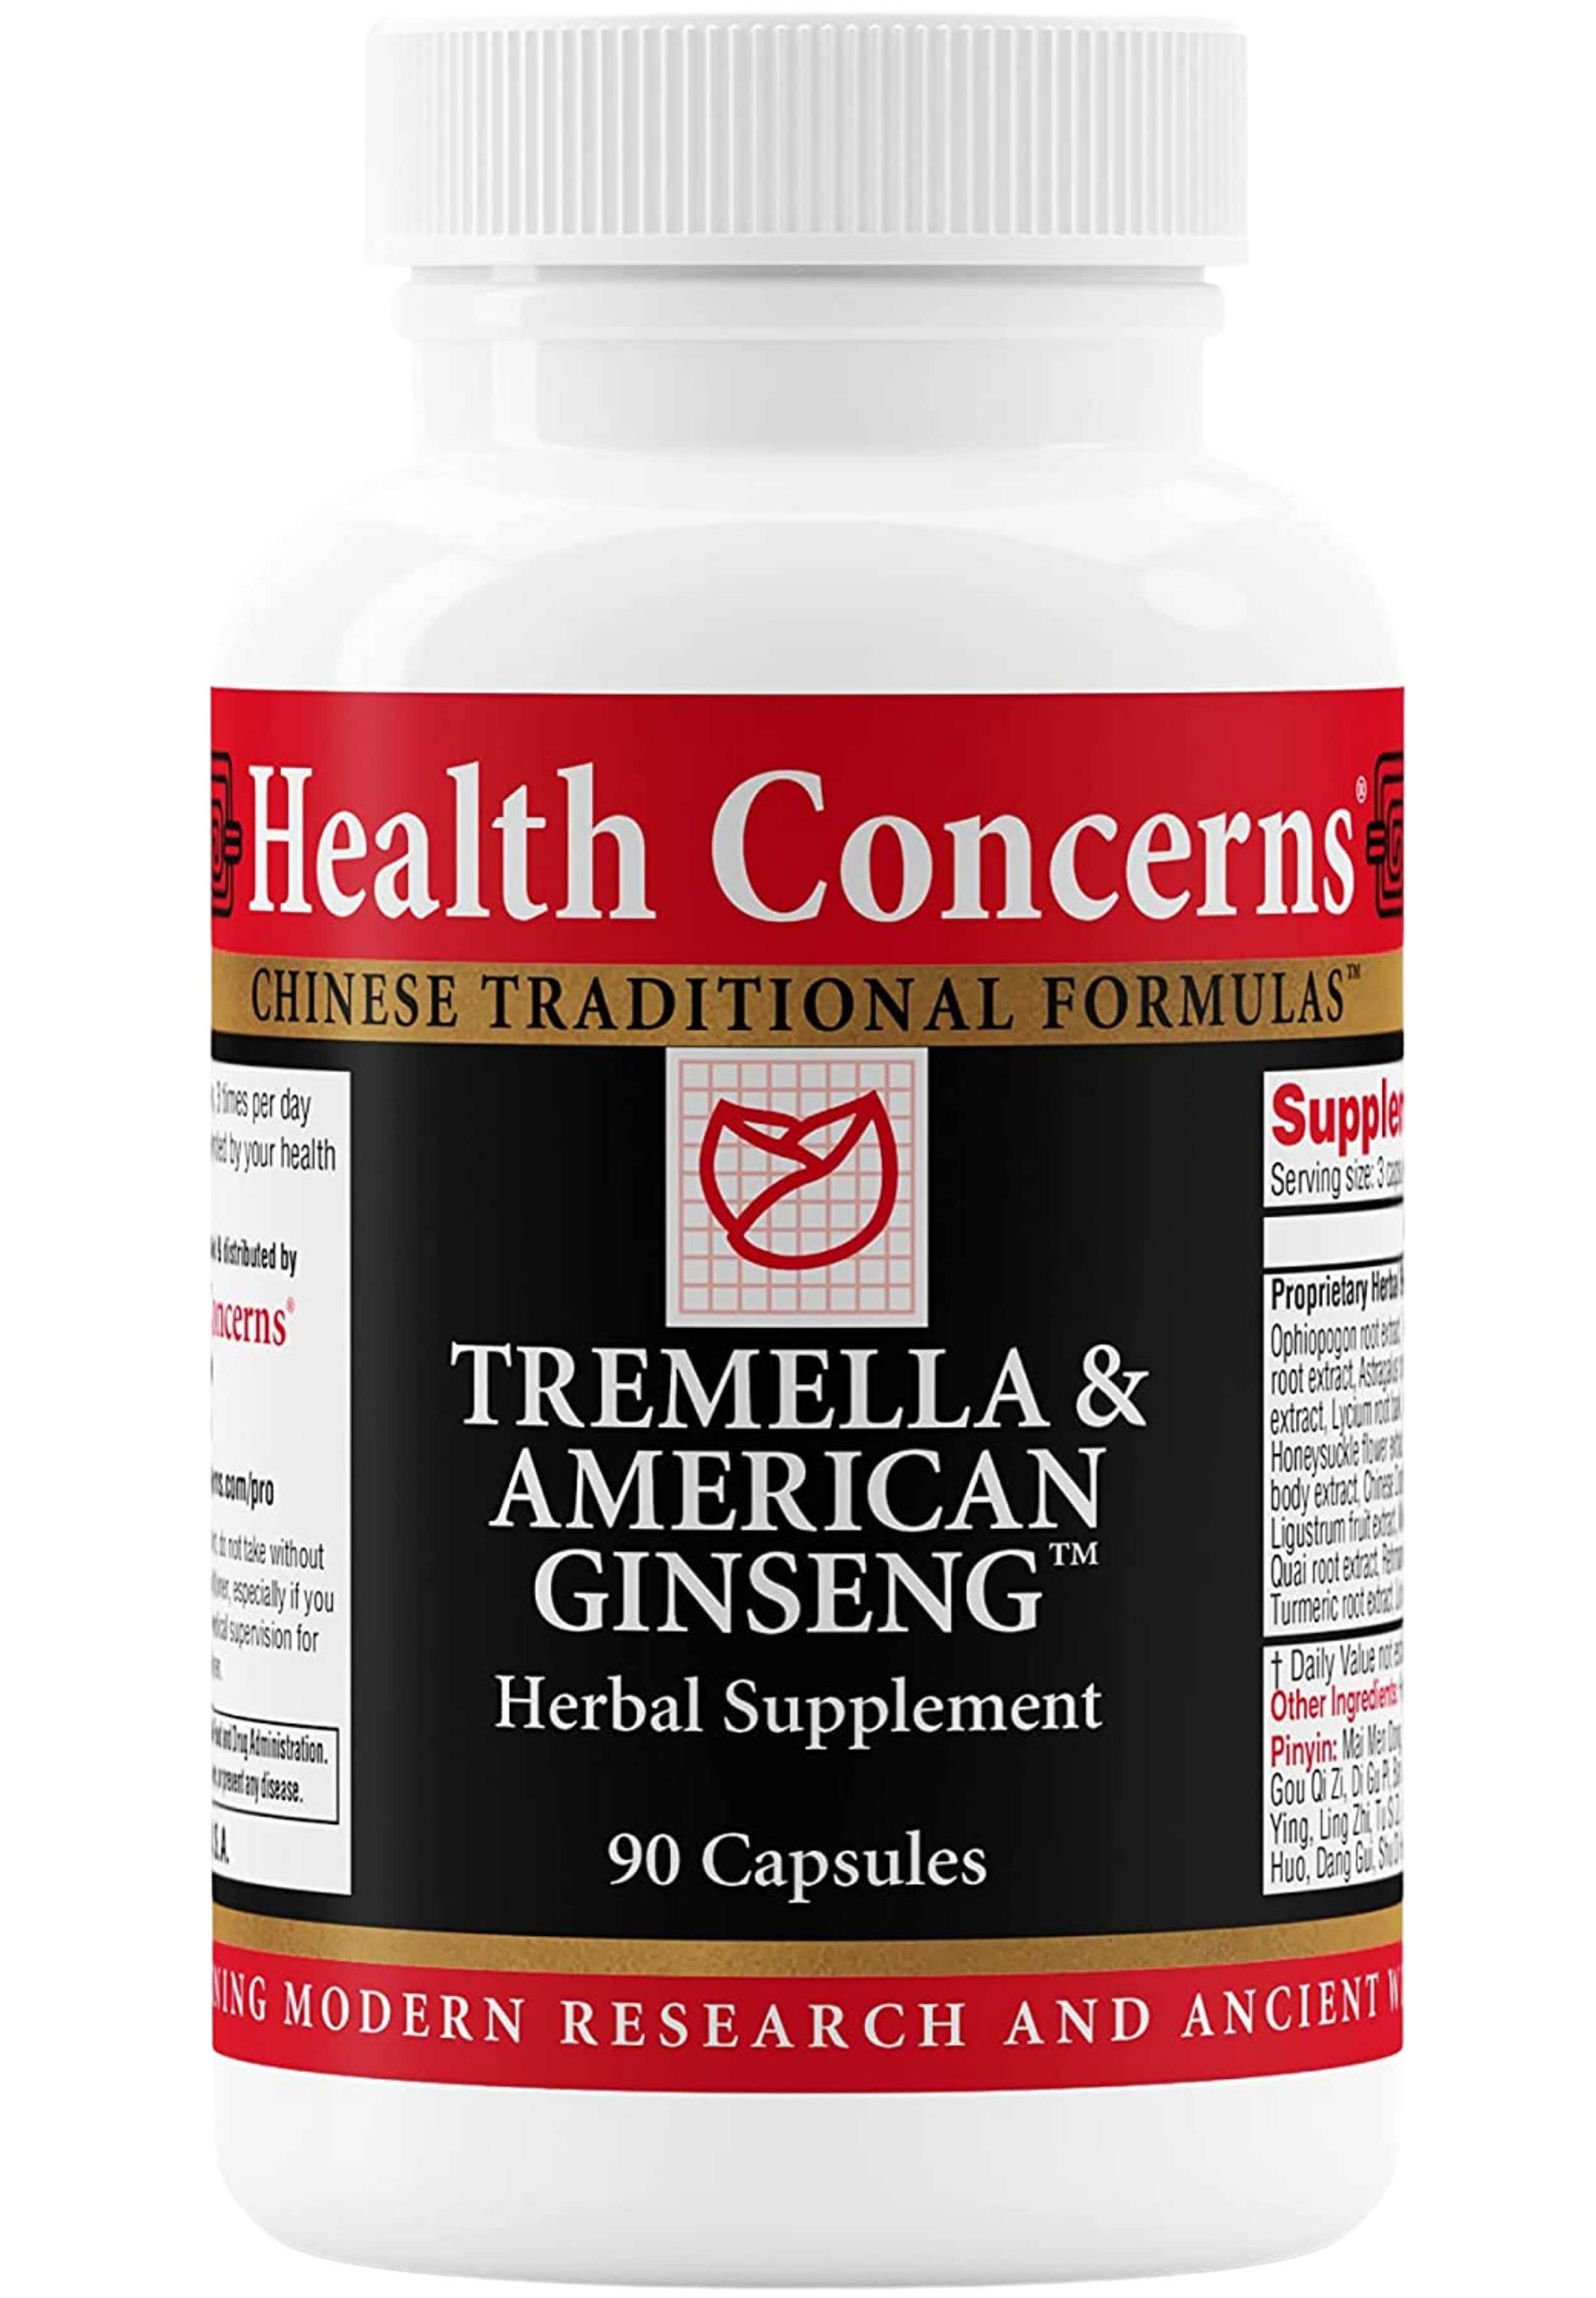 Health Concerns Tremella & American Ginseng